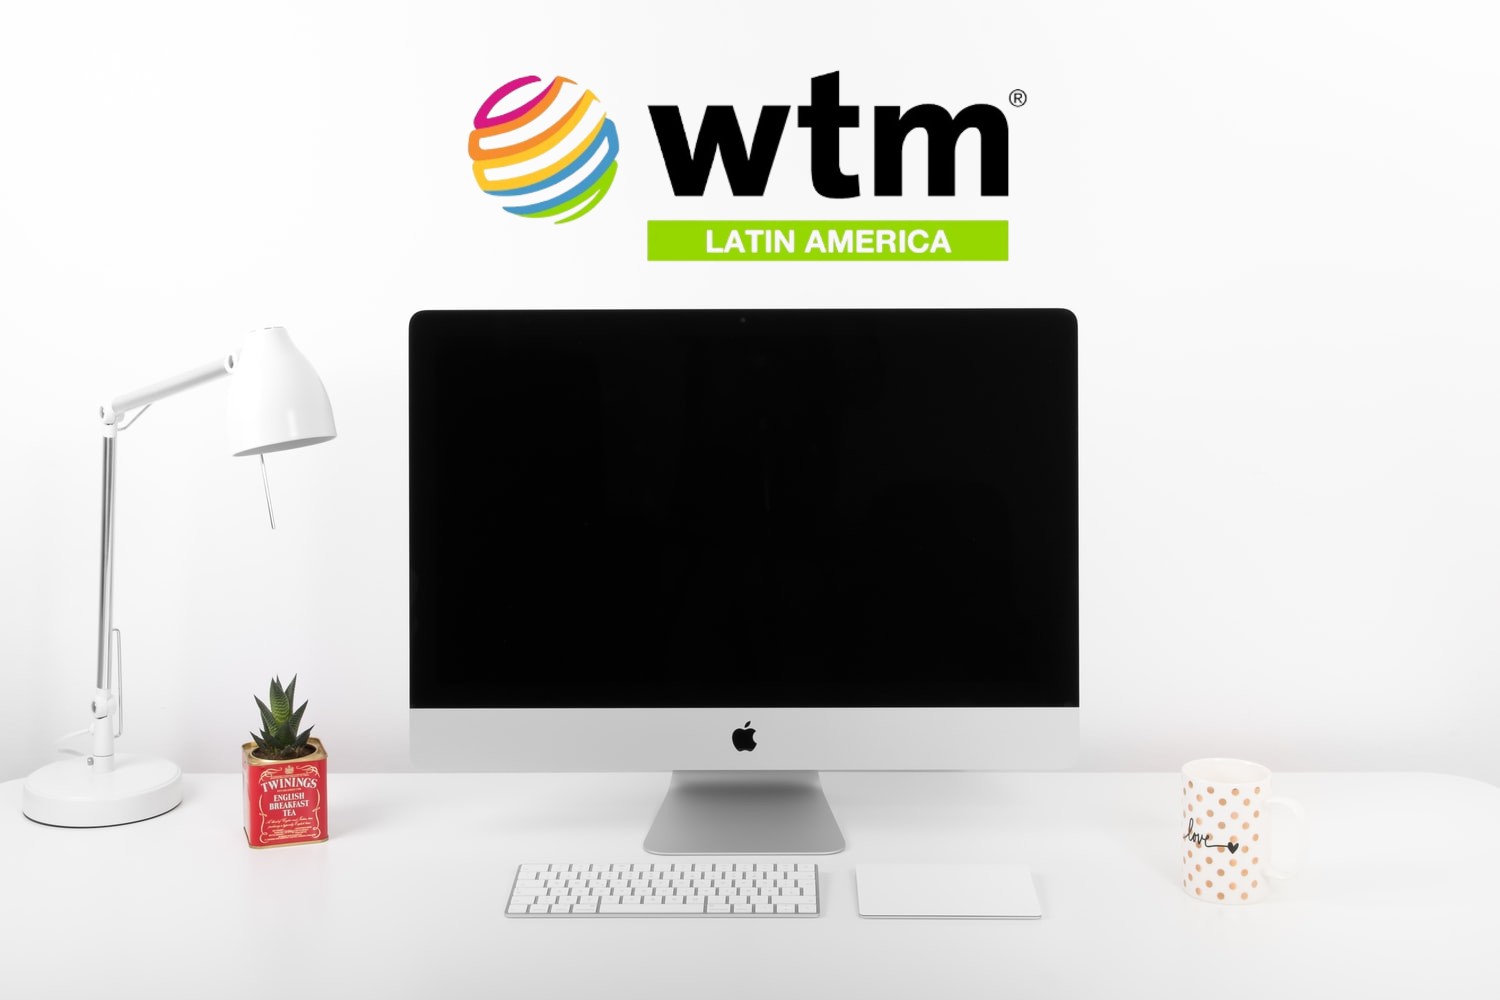 WTM Latin America logo